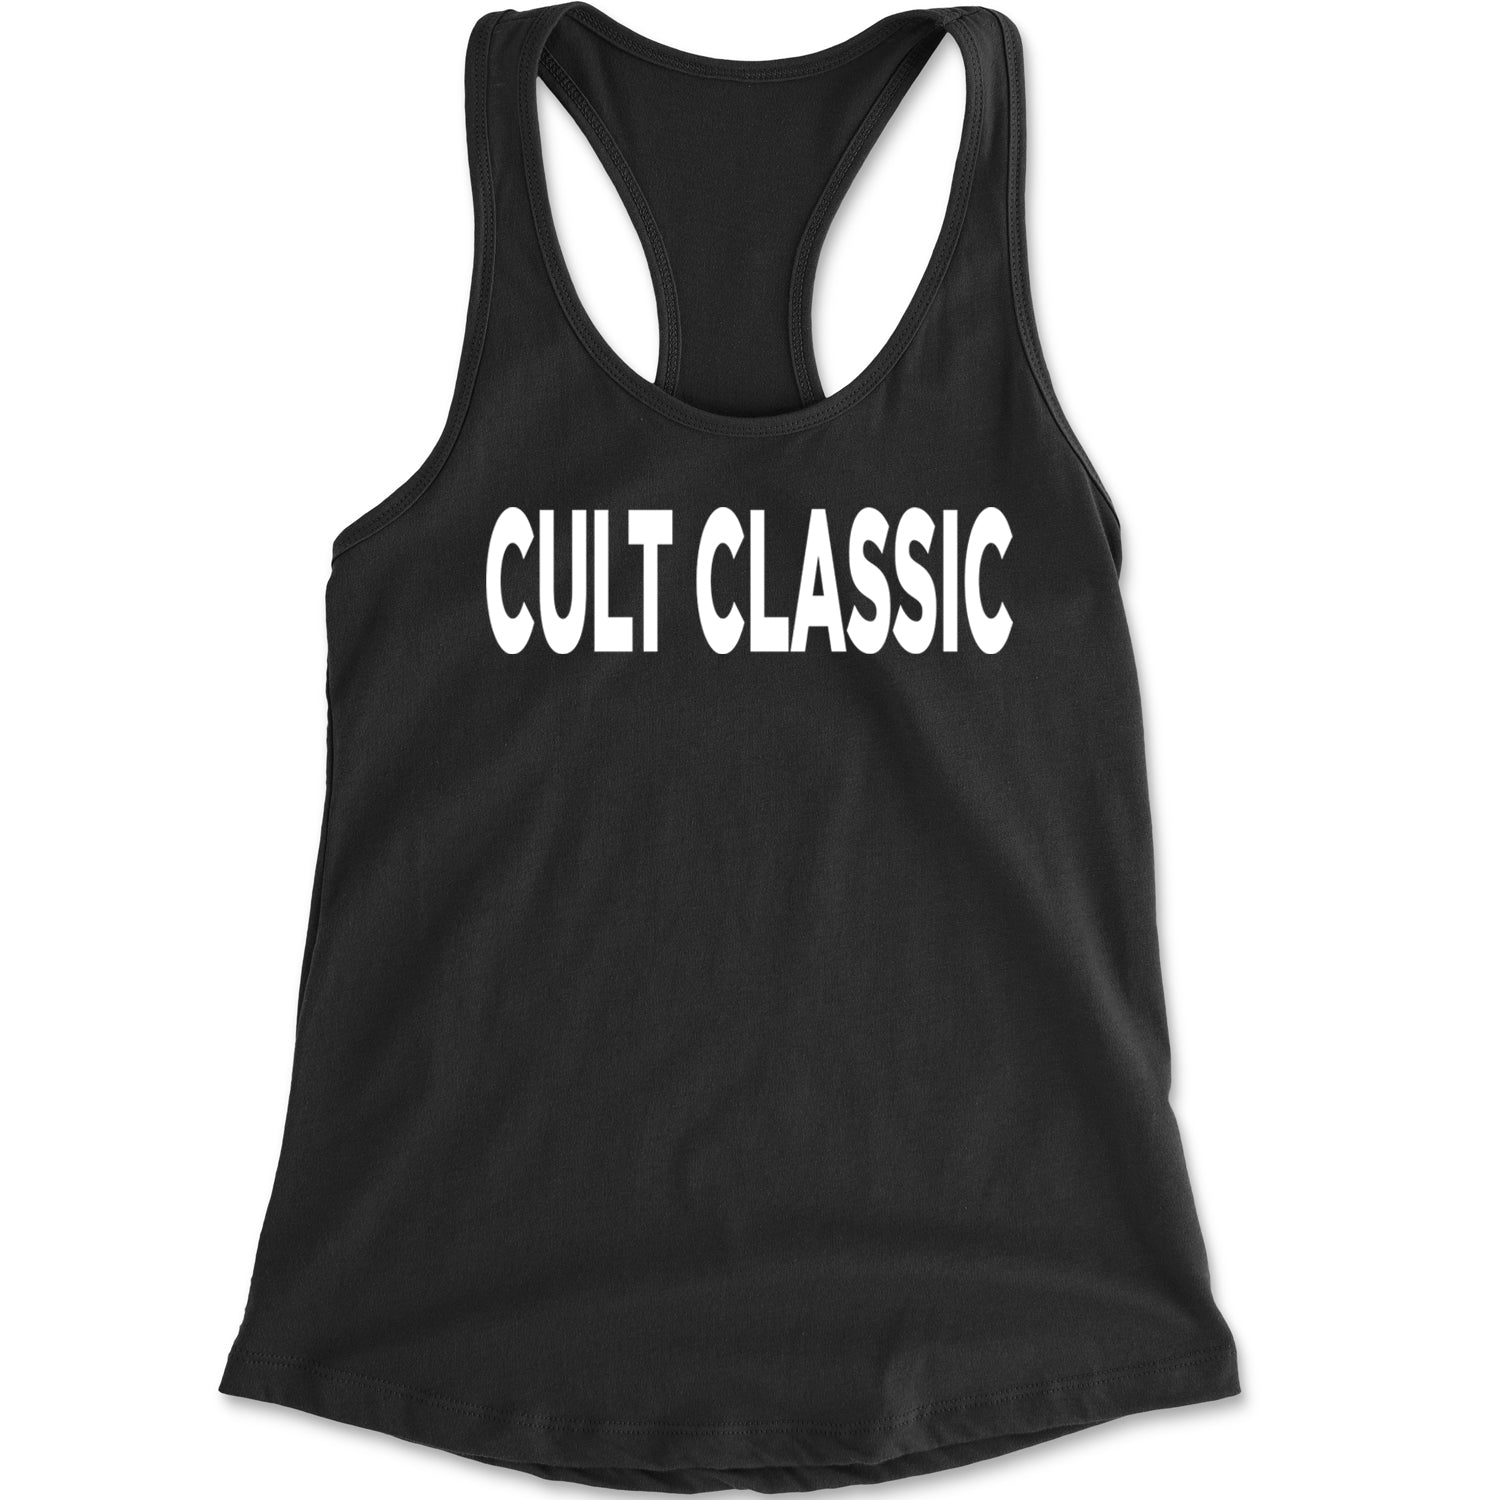 Cult Classic Party Girl Brat Racerback Tank Top for Women